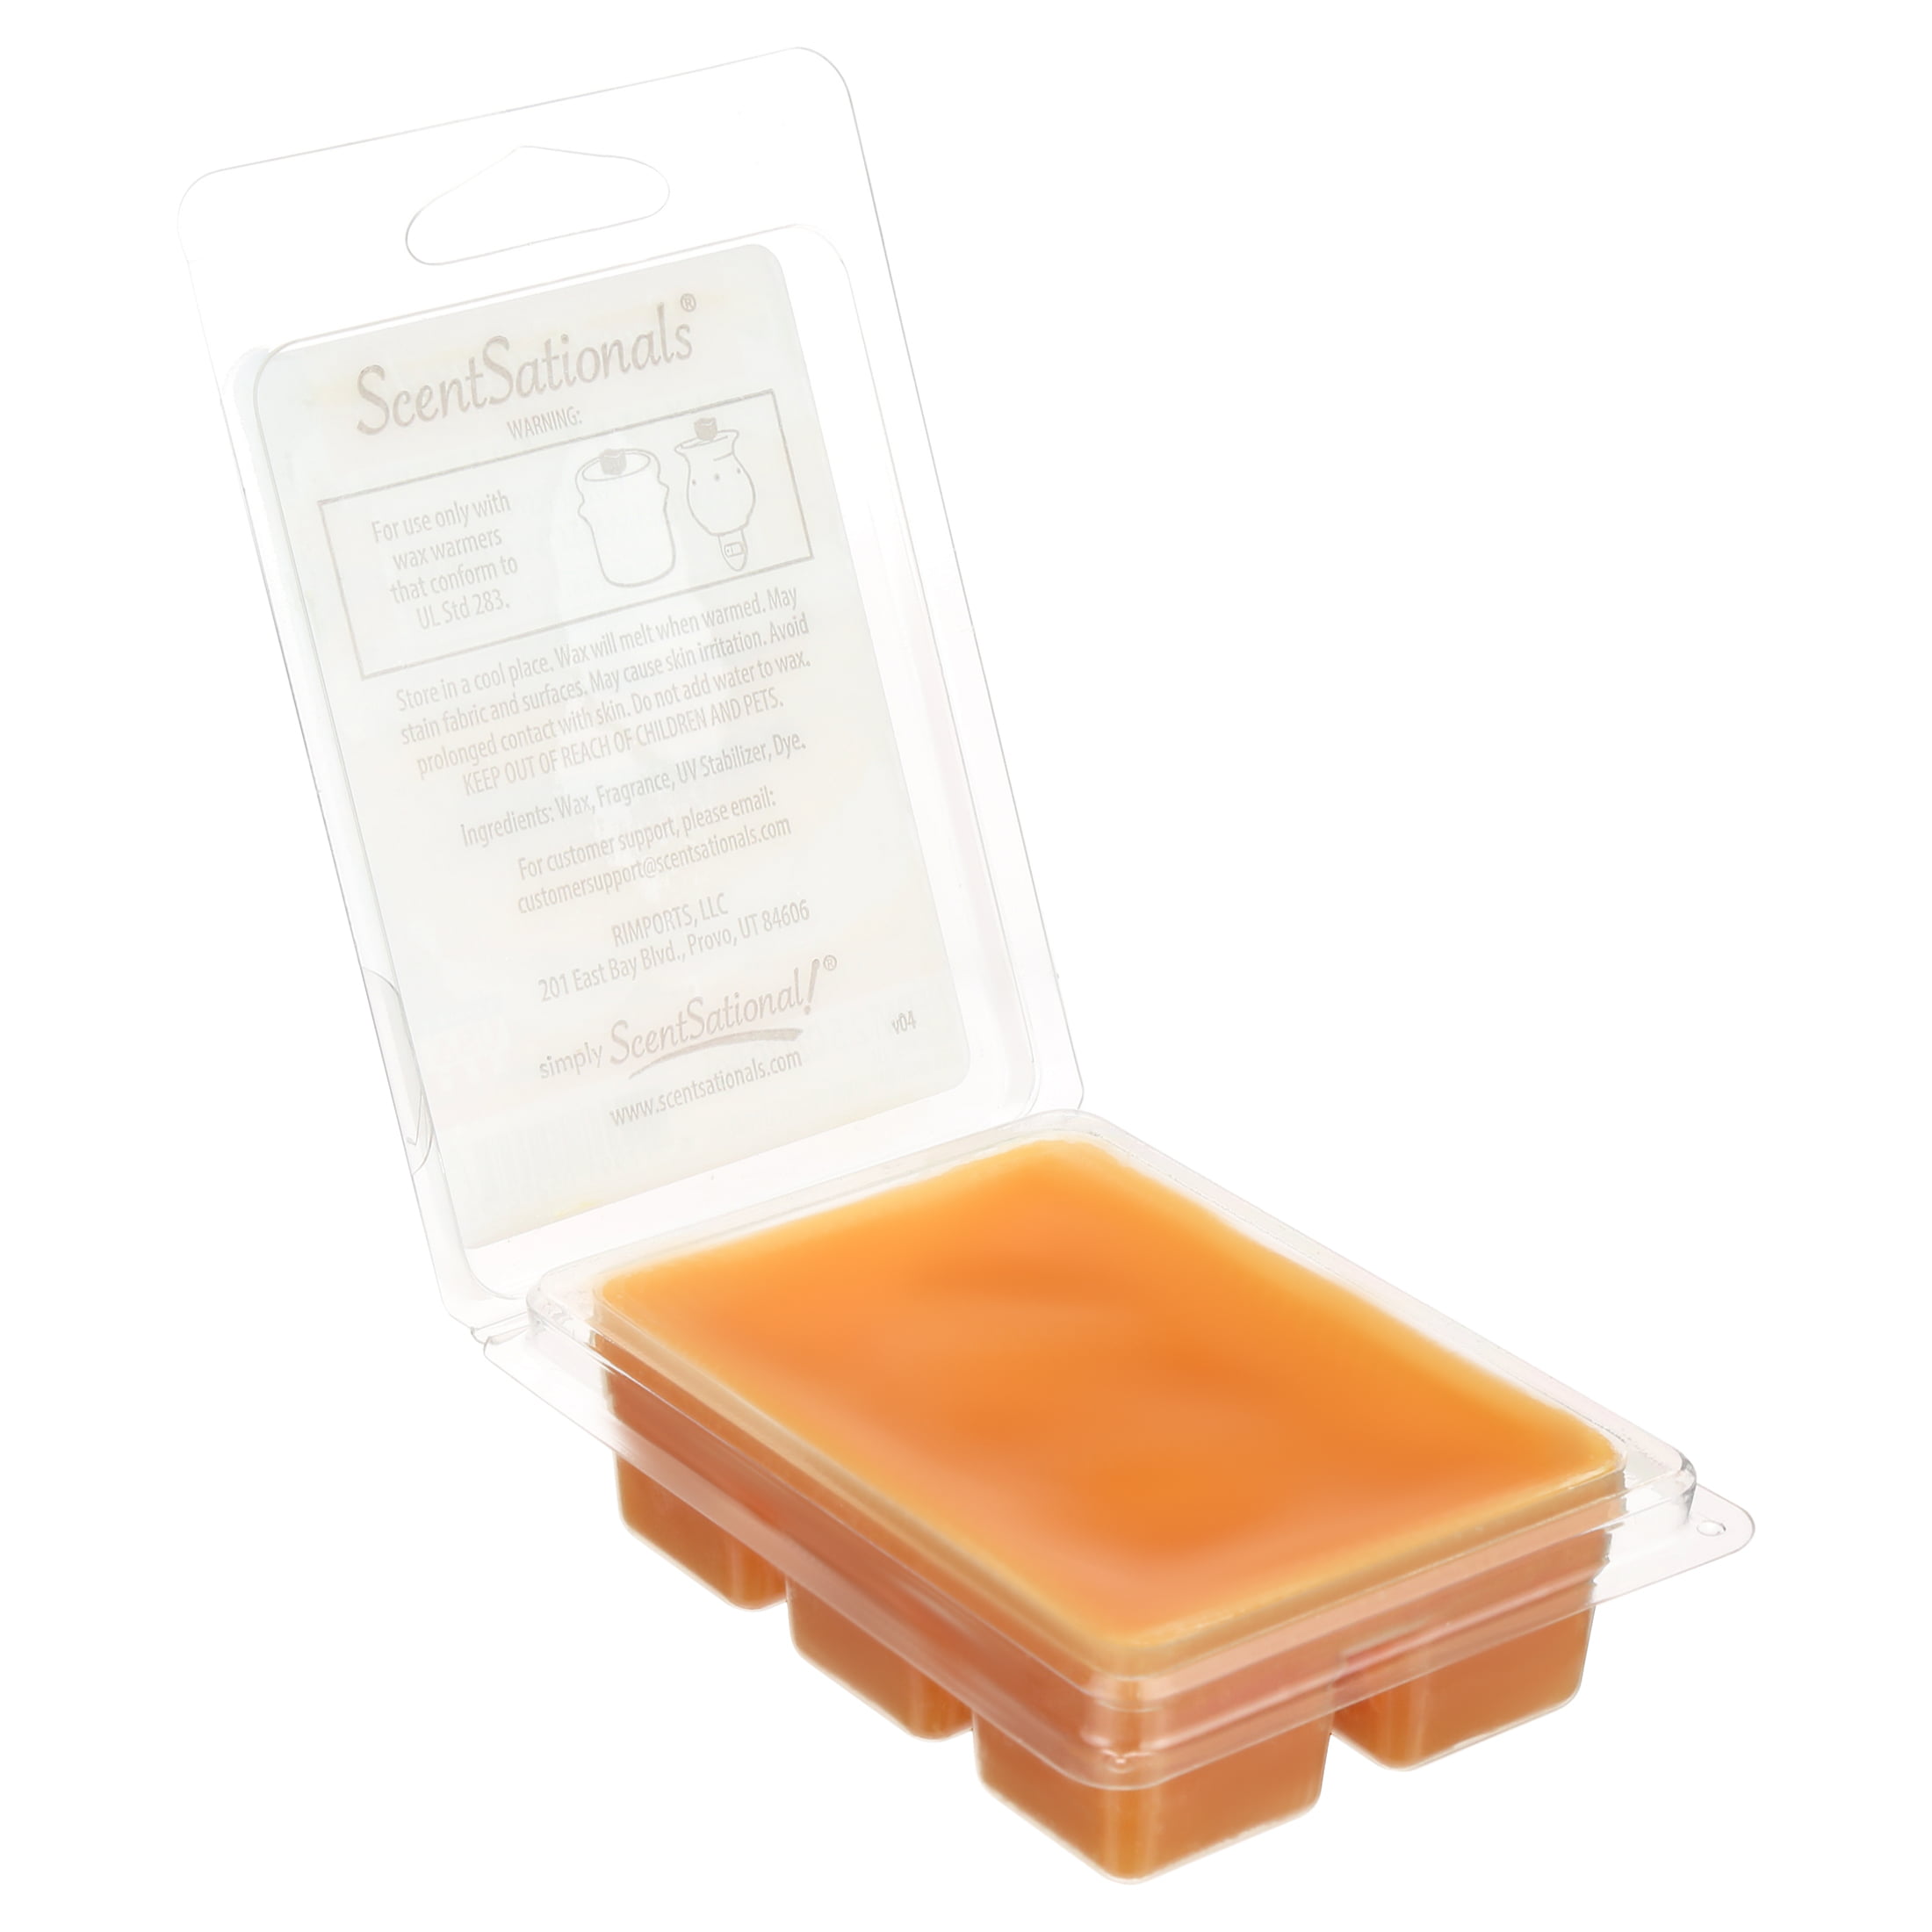 Scentsationals Wax Melt Cubes reviews in Home Fragrance - ChickAdvisor